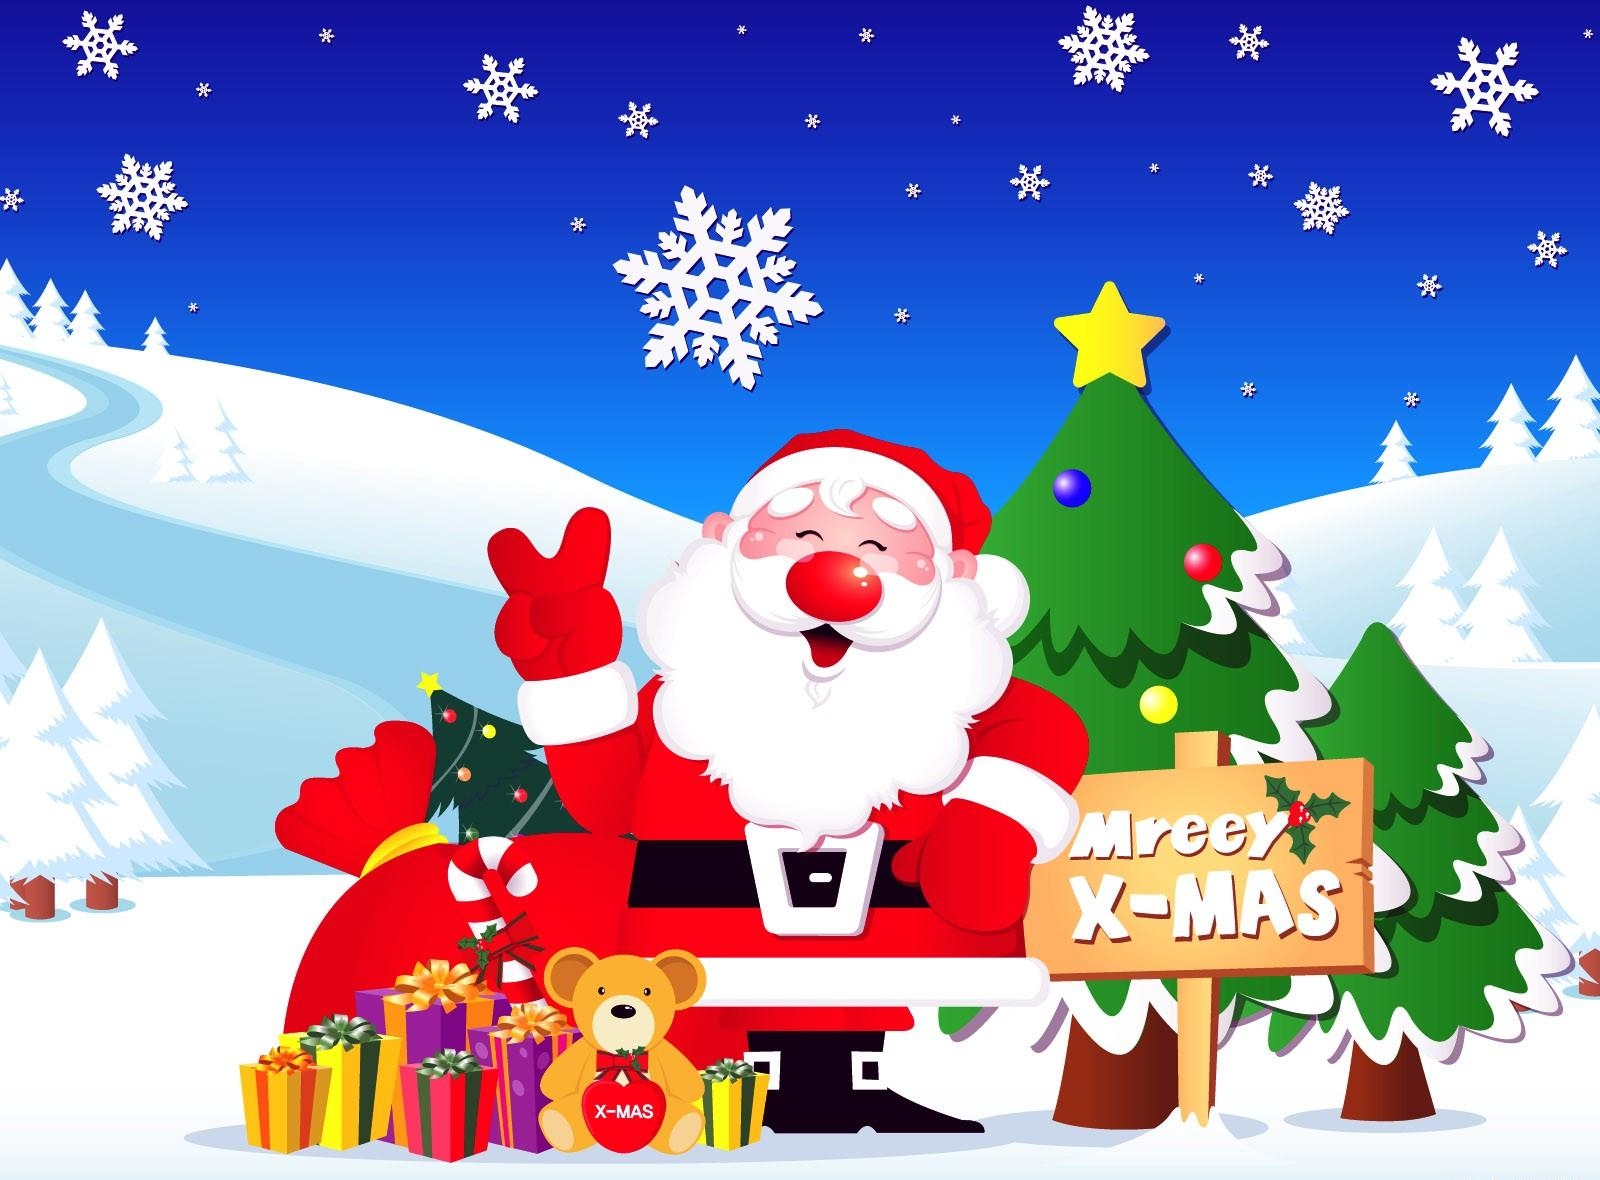 santa claus, holidays, fir trees, snowflakes, road, presents, gifts